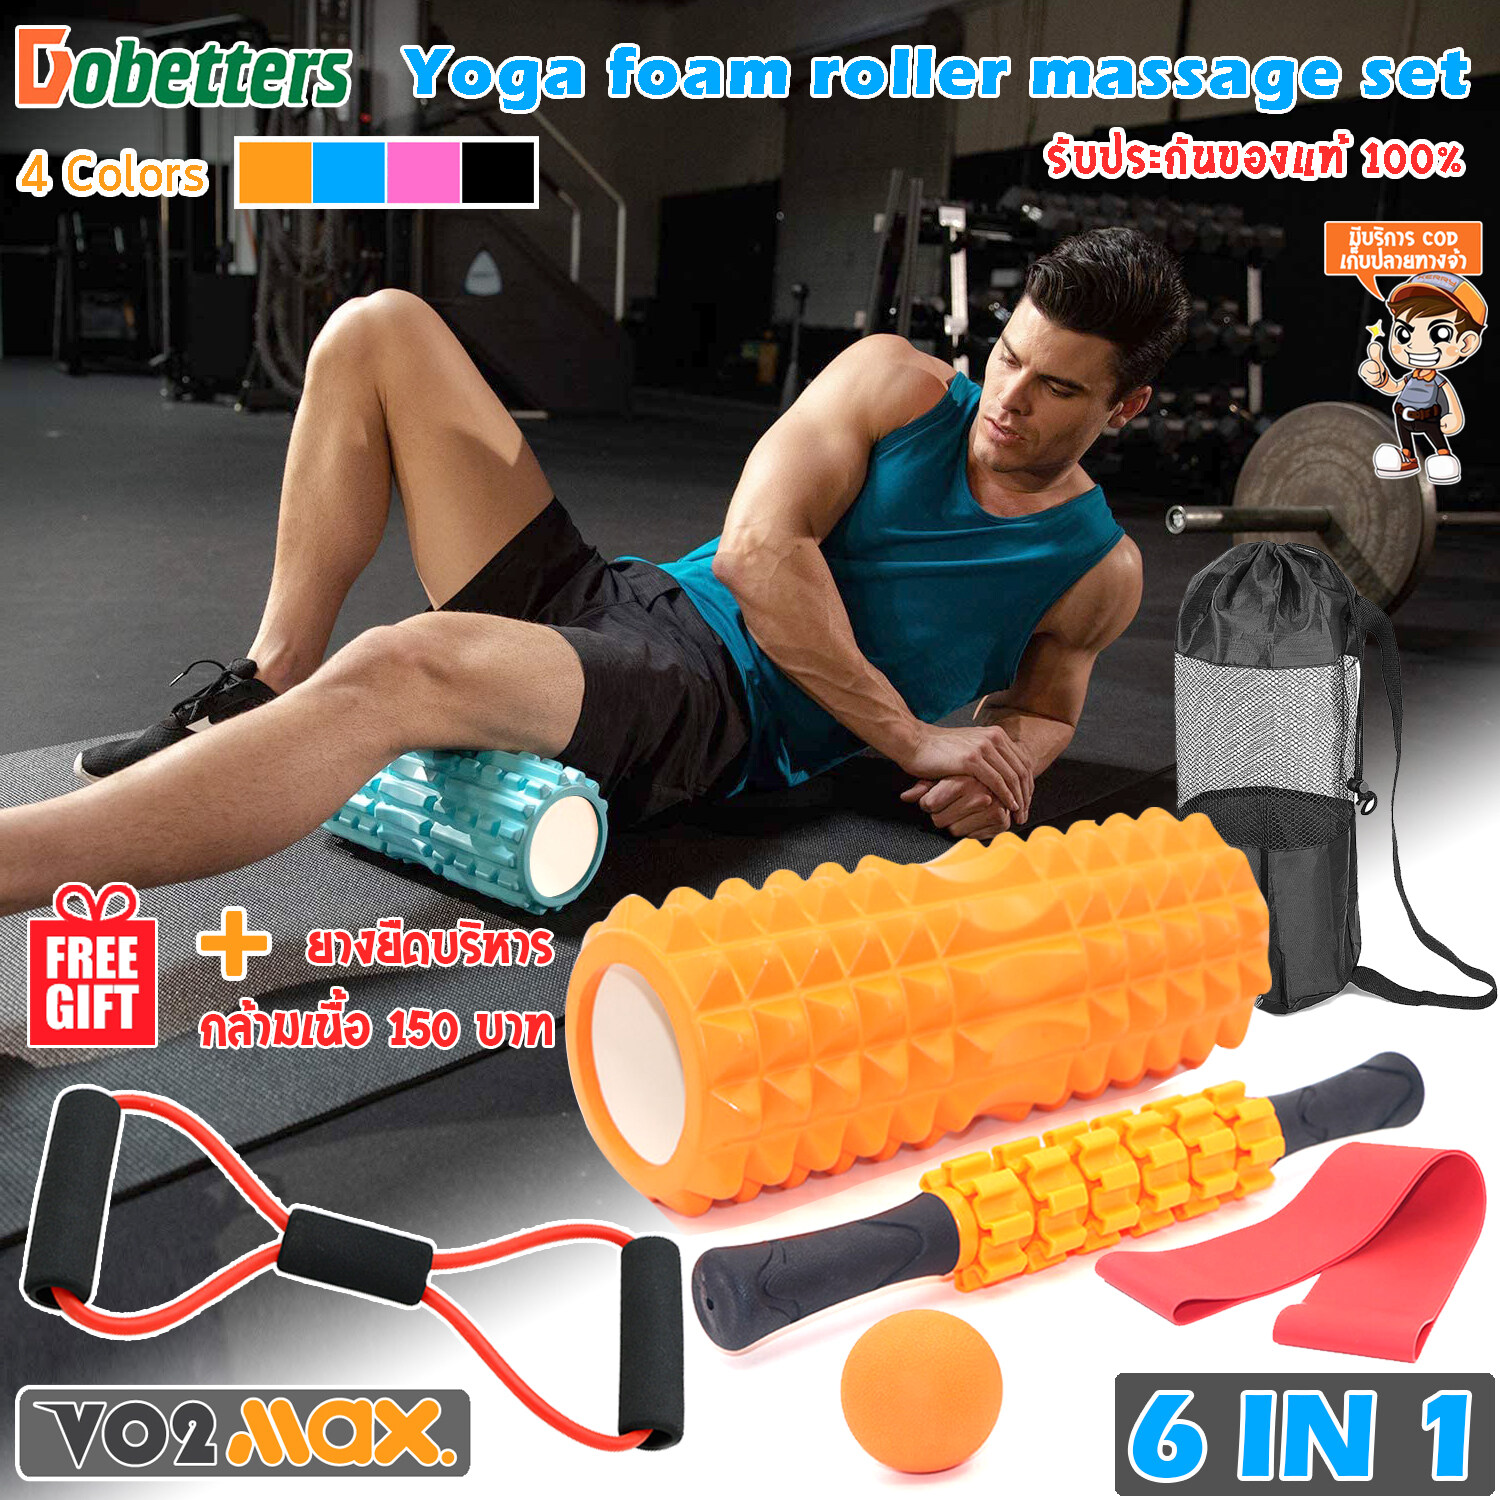 6 IN 1 โฟมโรลเลอร์ โฟมนวดกล้ามเนื้อ โฟมโยคะ Yoag Foam Roller Massage Set แถมฟรี ยางยืดออกกำลังกาย มูลค่า 150 บาท